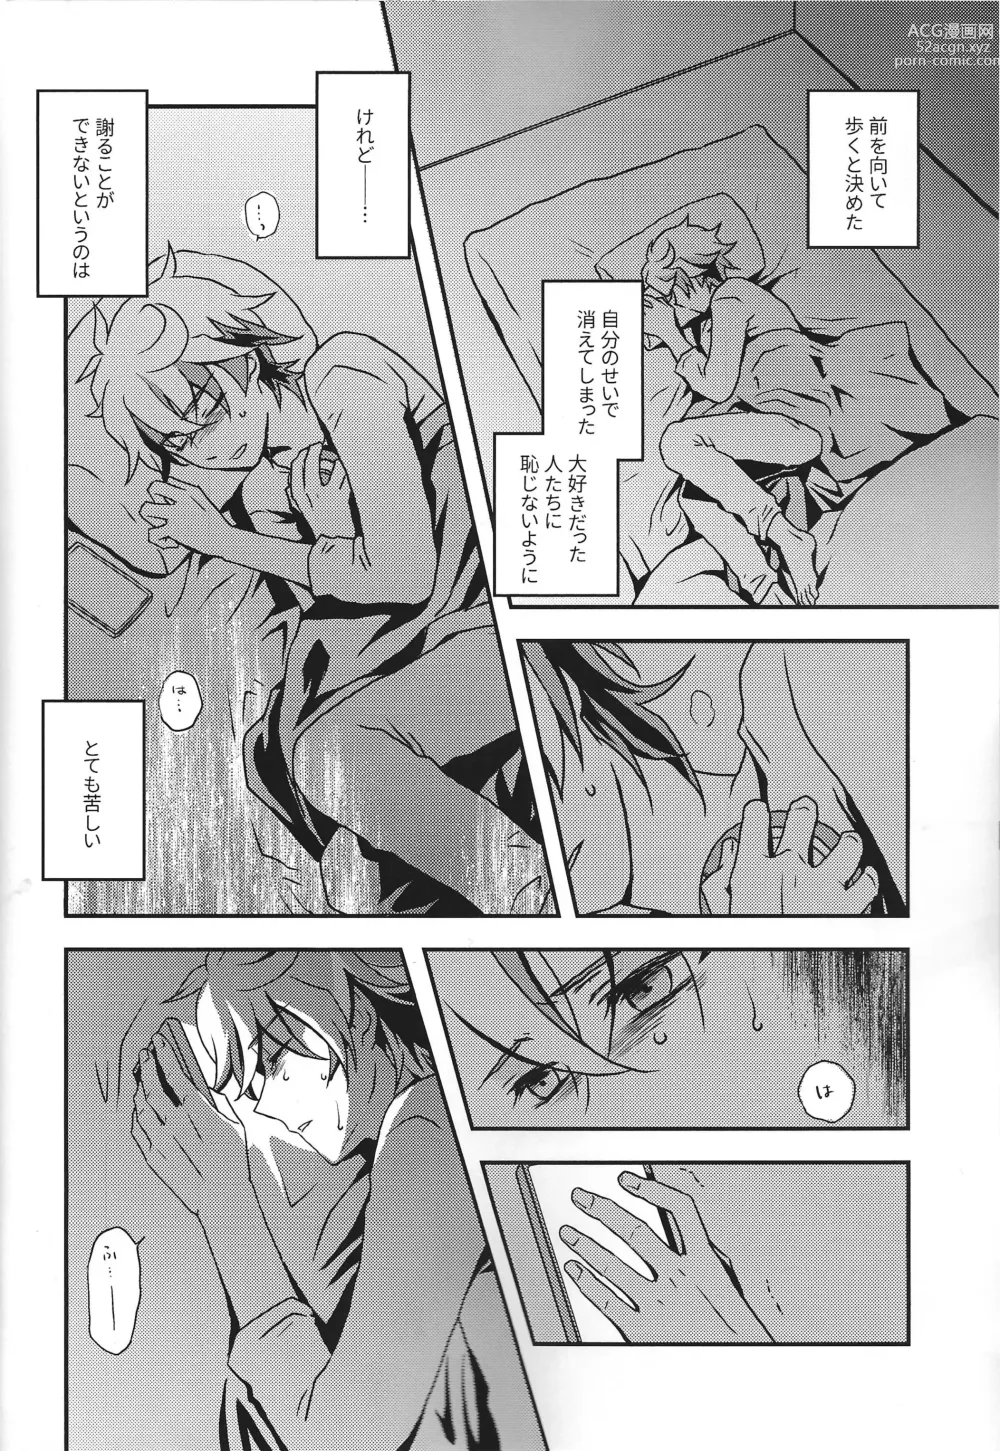 Page 15 of doujinshi Na o Yobu Koe